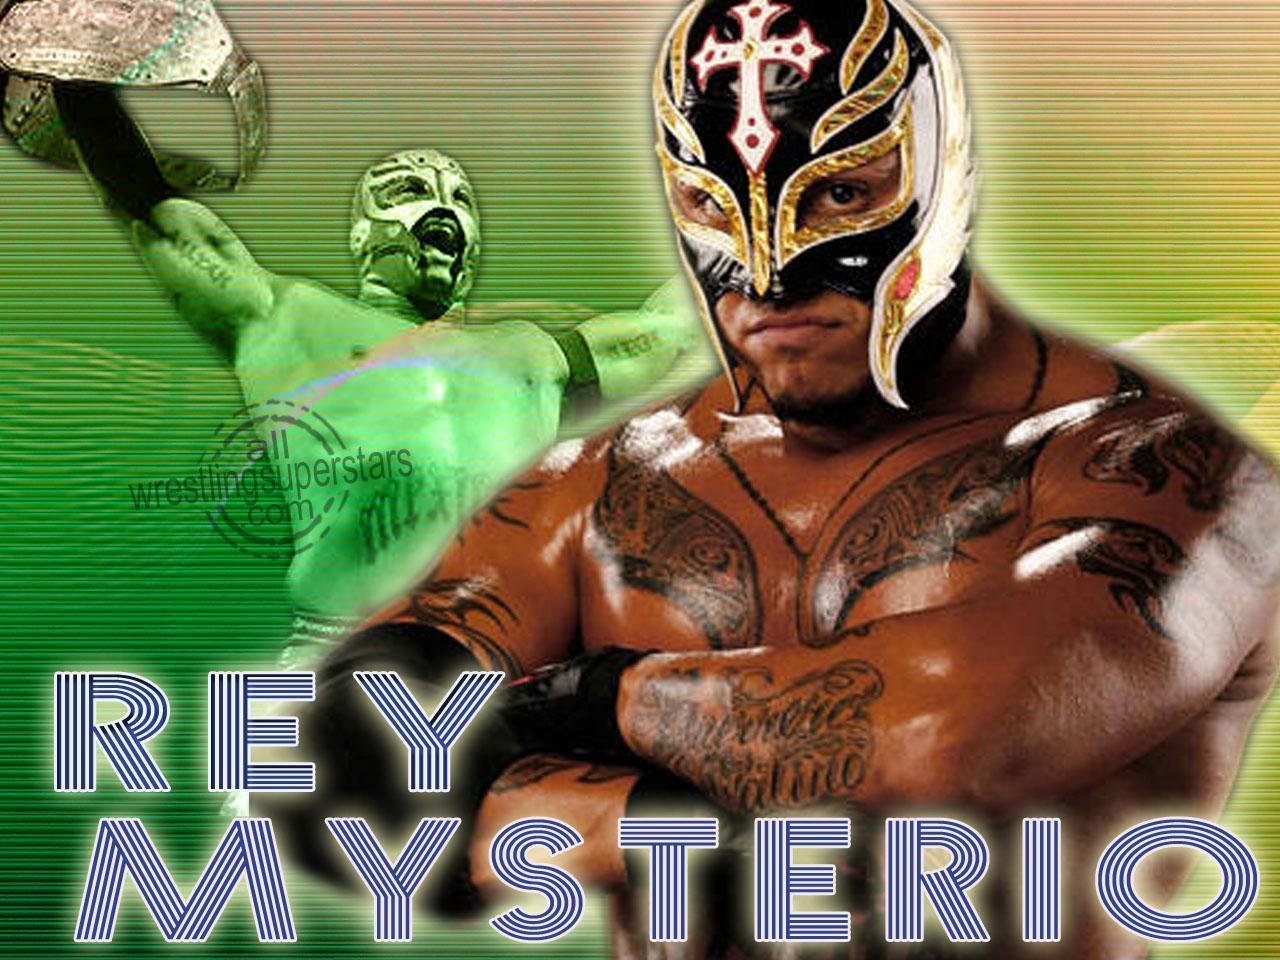 WWE WWE Wrestler Rey Mysterio